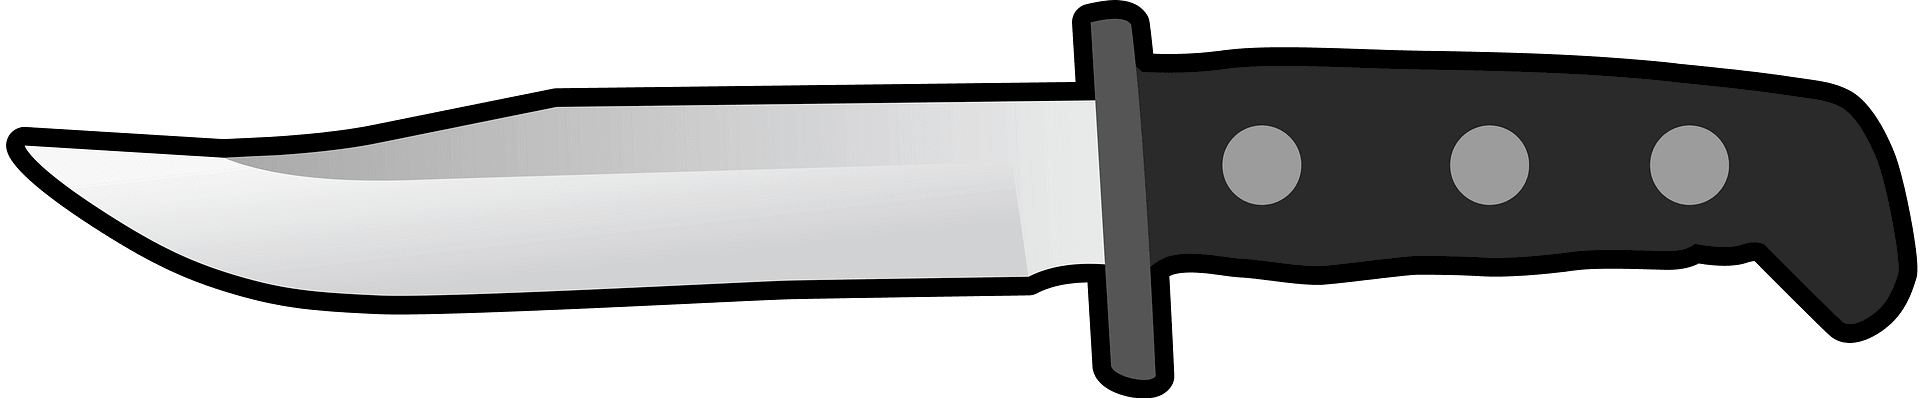 Knife clipart transparent background